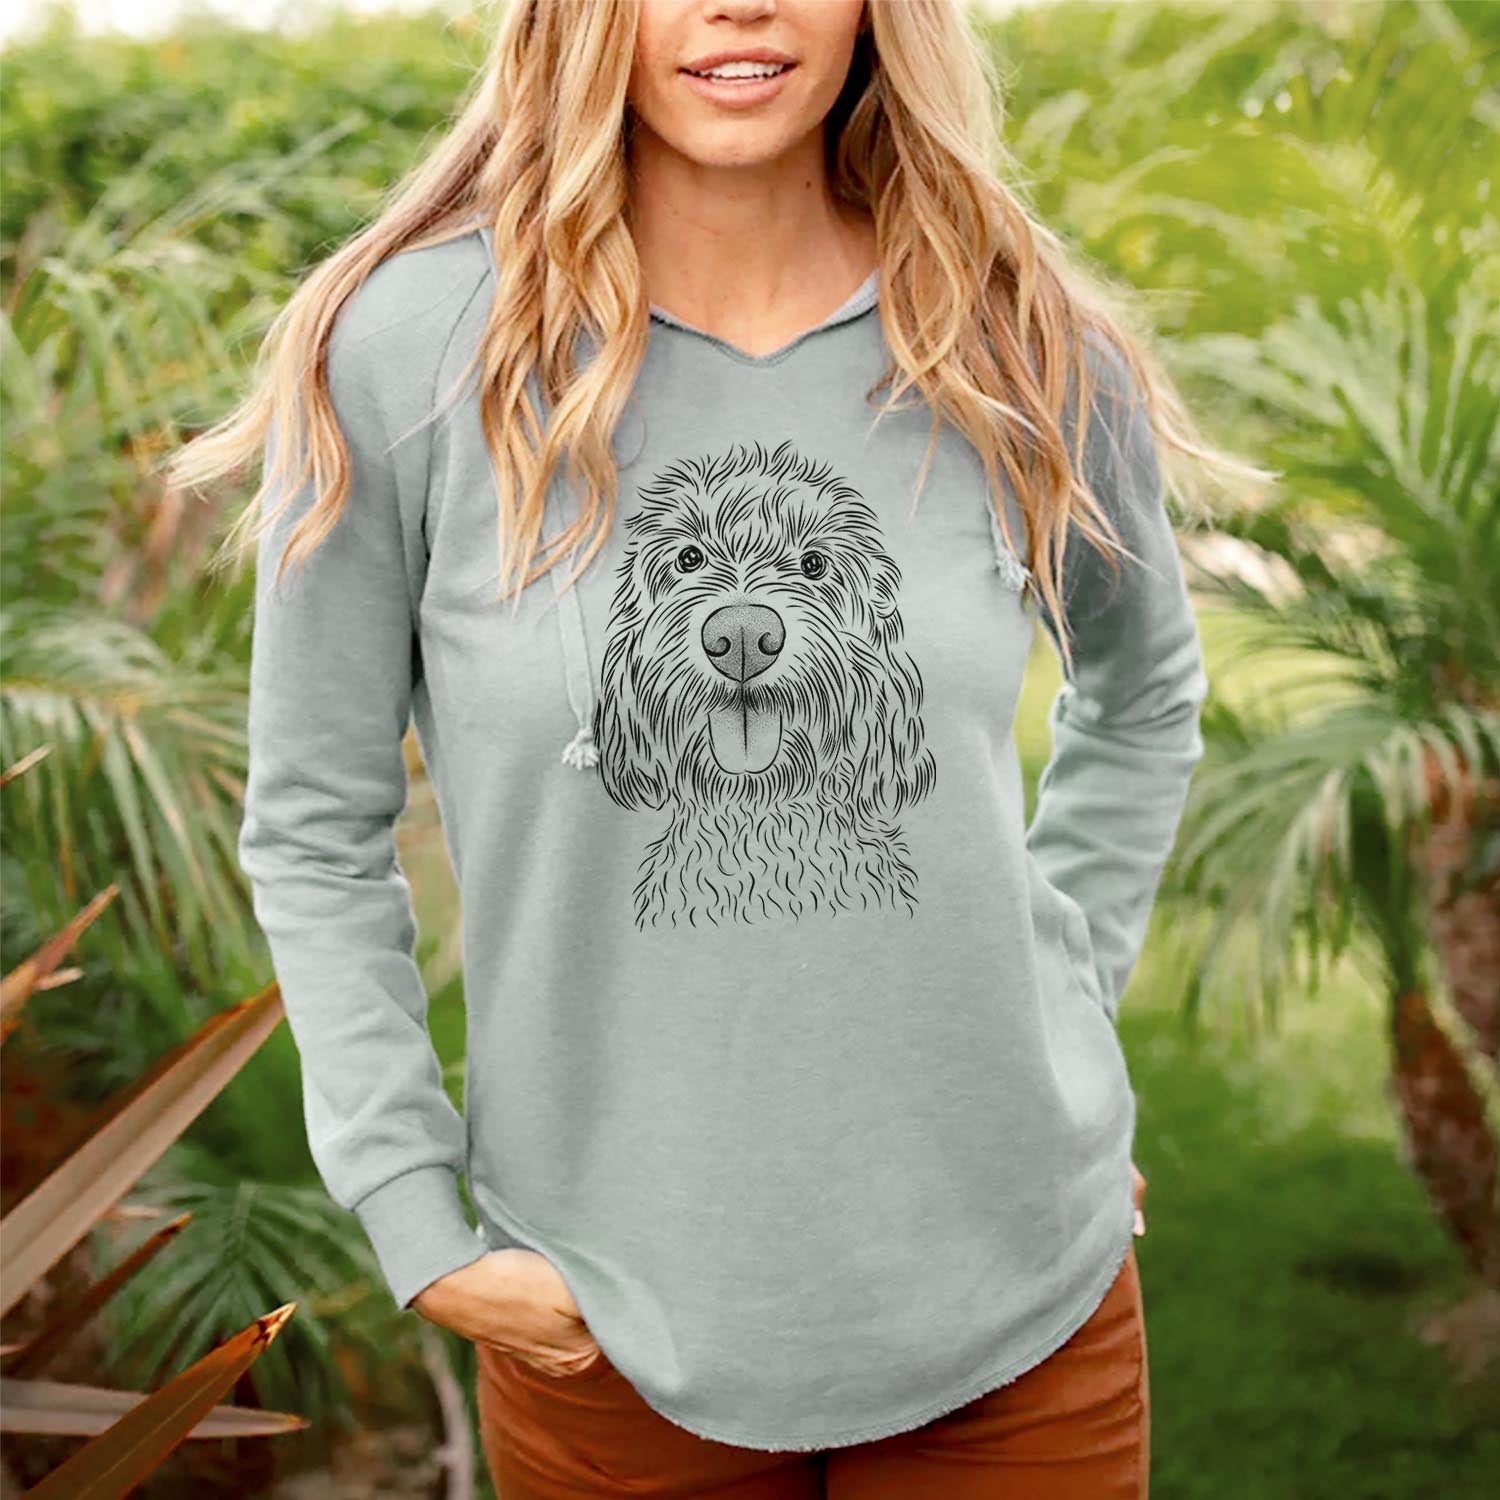 Clover the Cockapoo - Cali Wave Hooded Sweatshirt